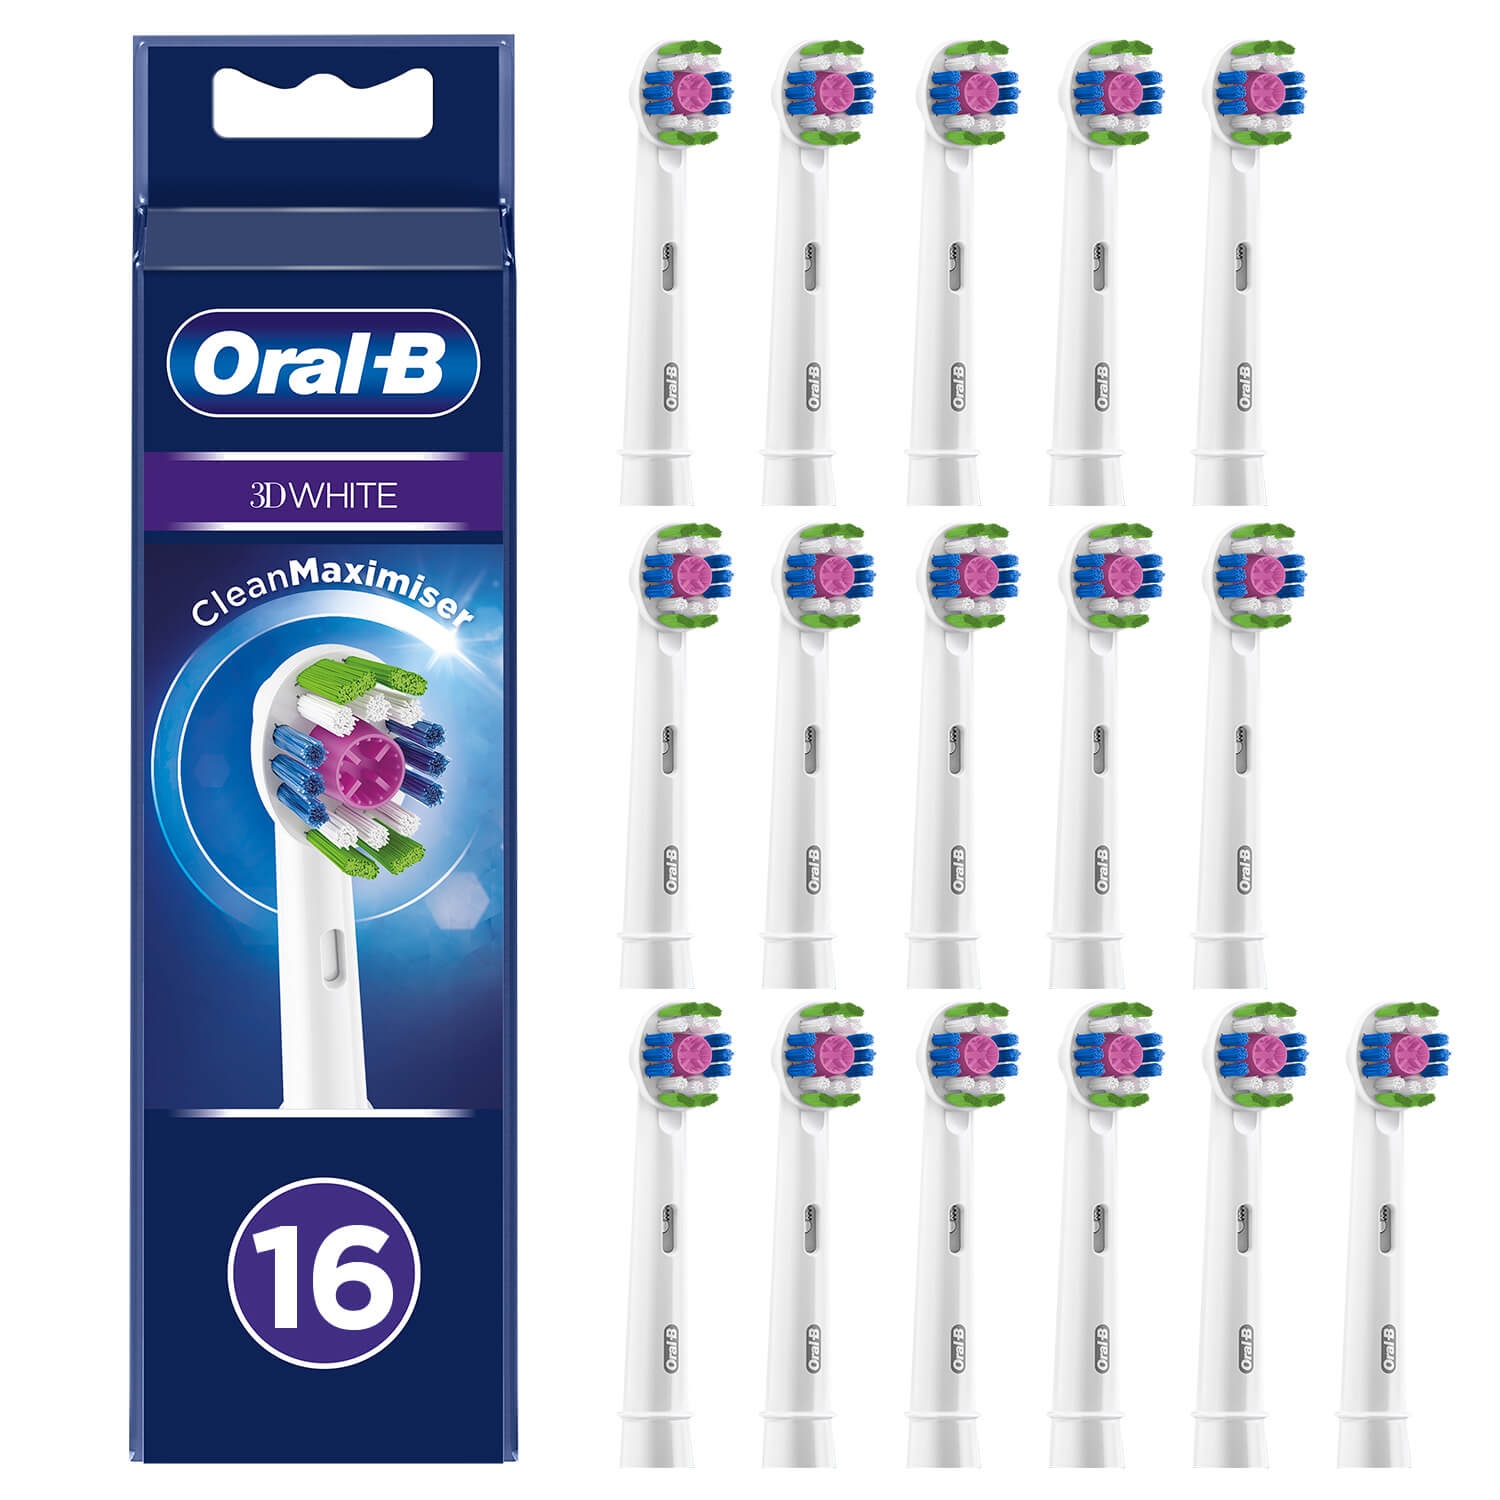 Oral-B 3D White Opzetborstels Met CleanMaximiser, 16 Stuks